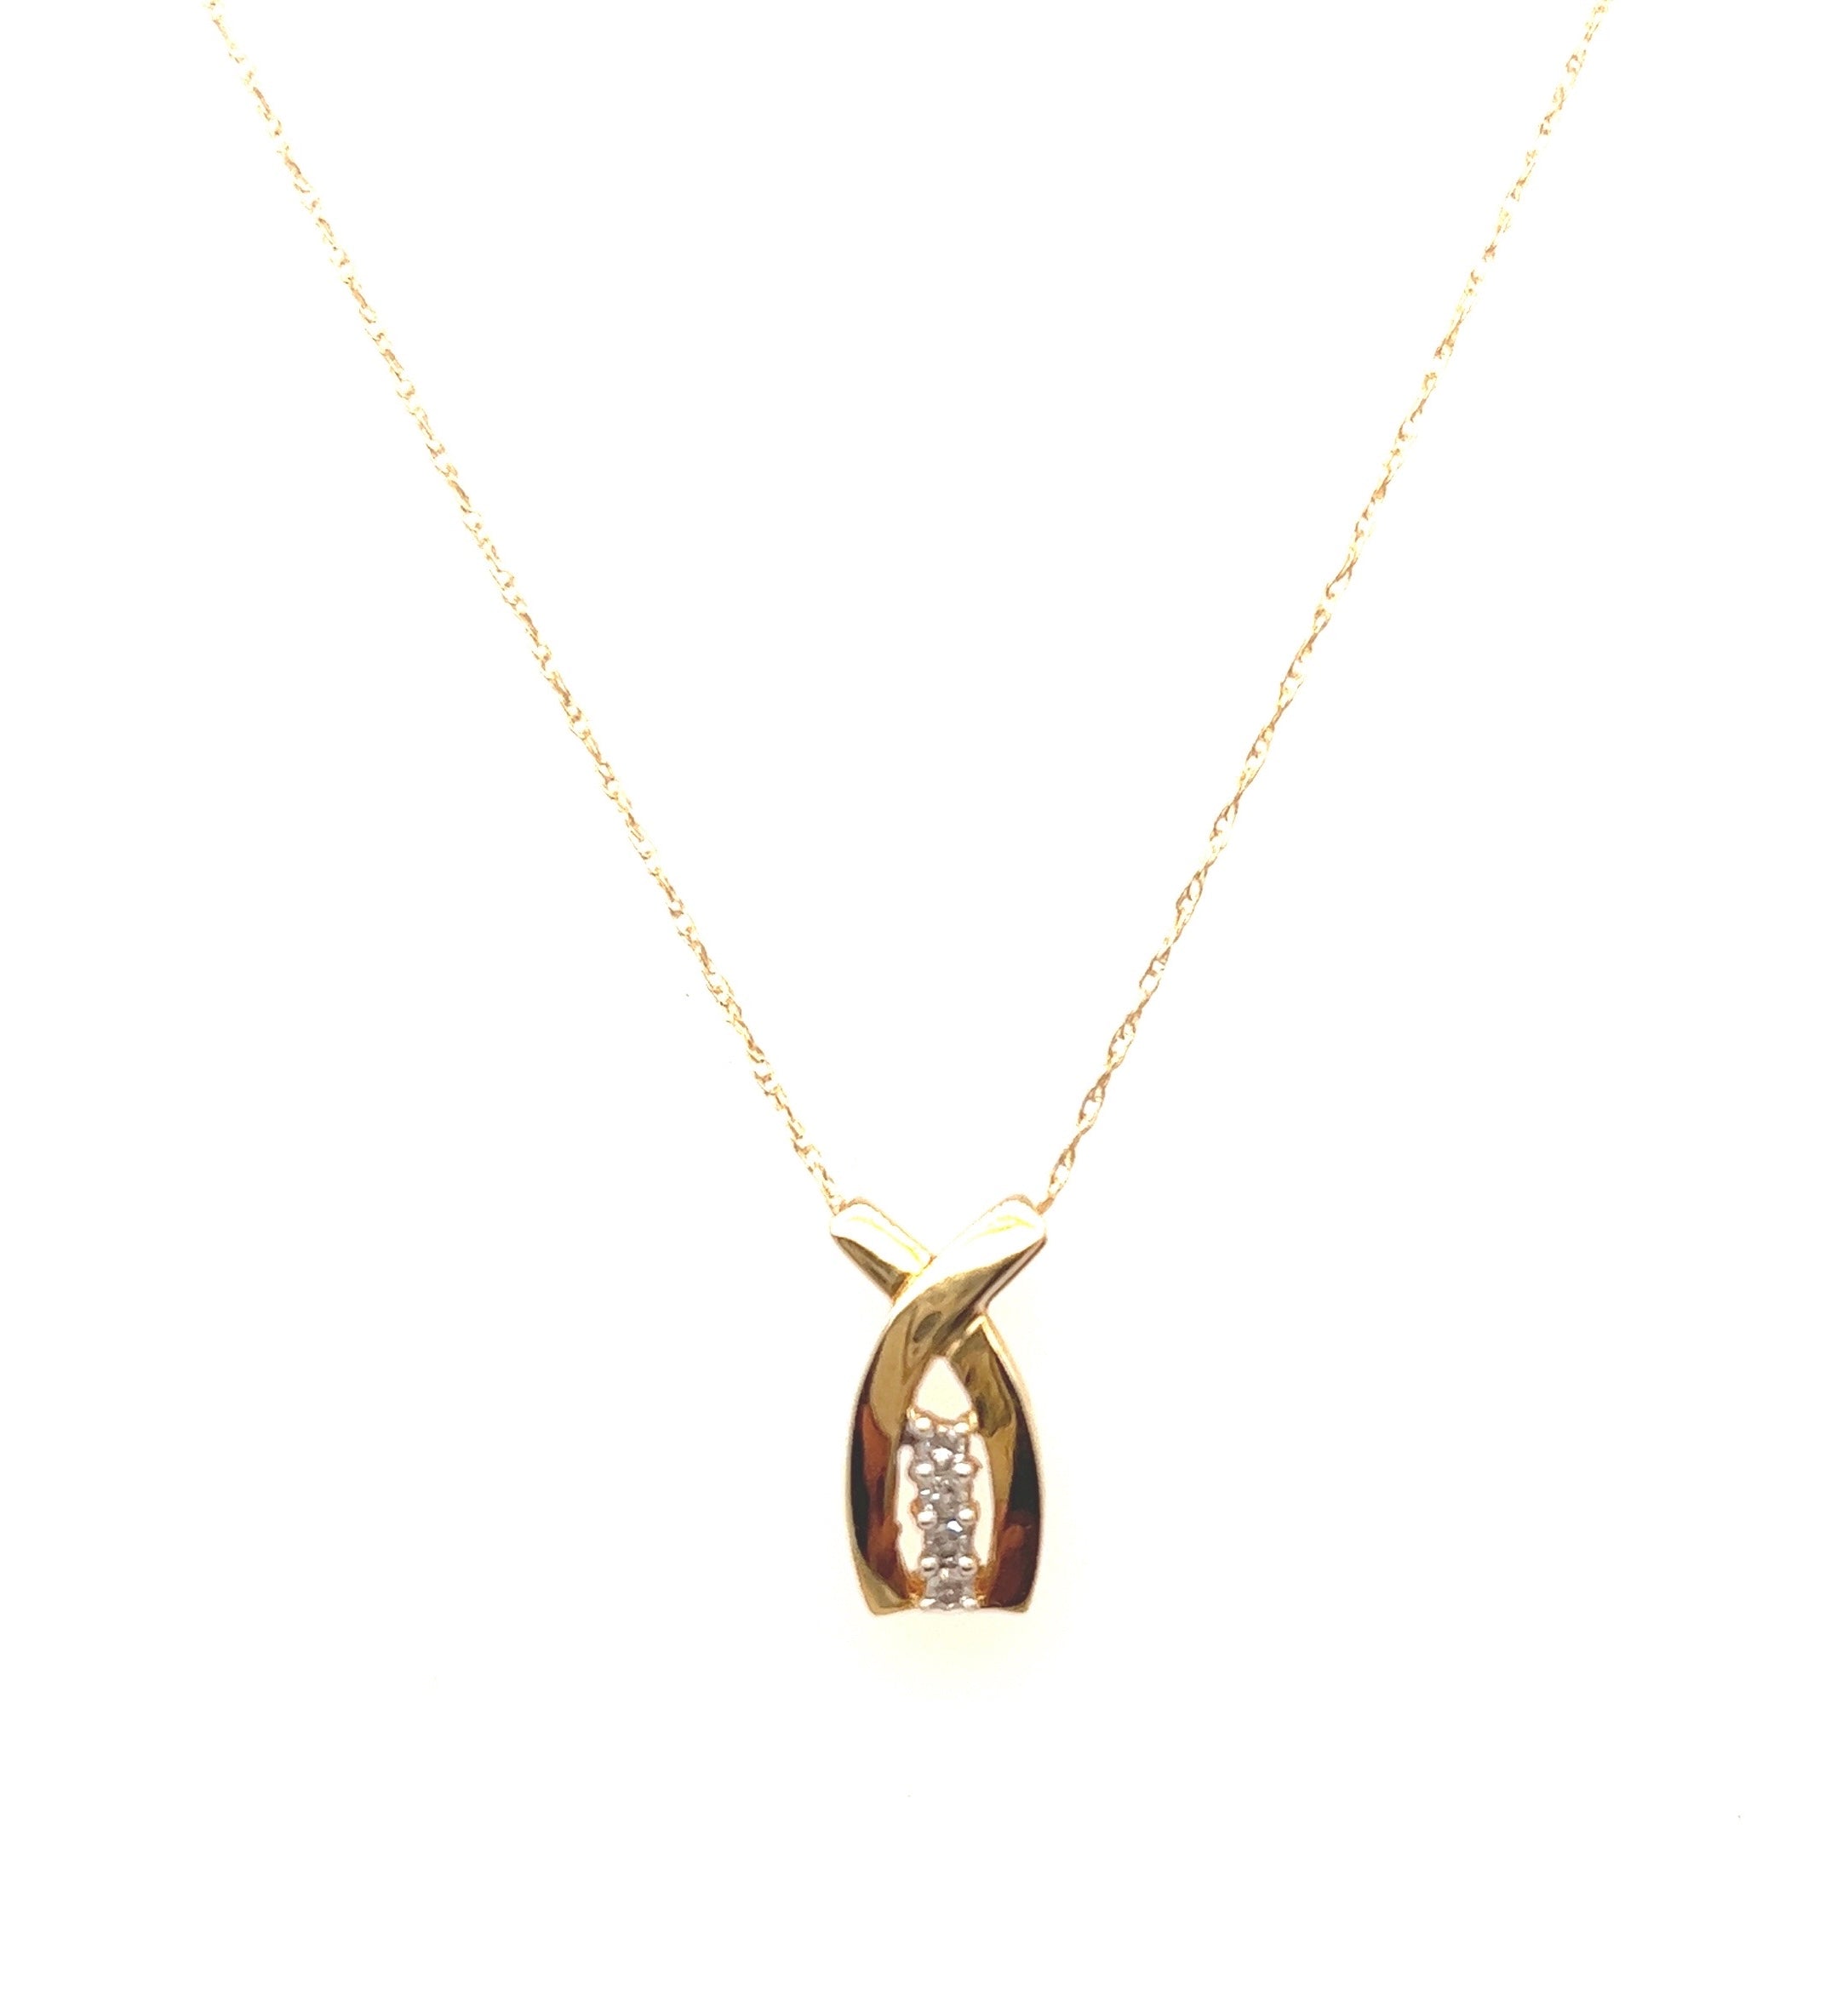 10k gold Diamond pendant